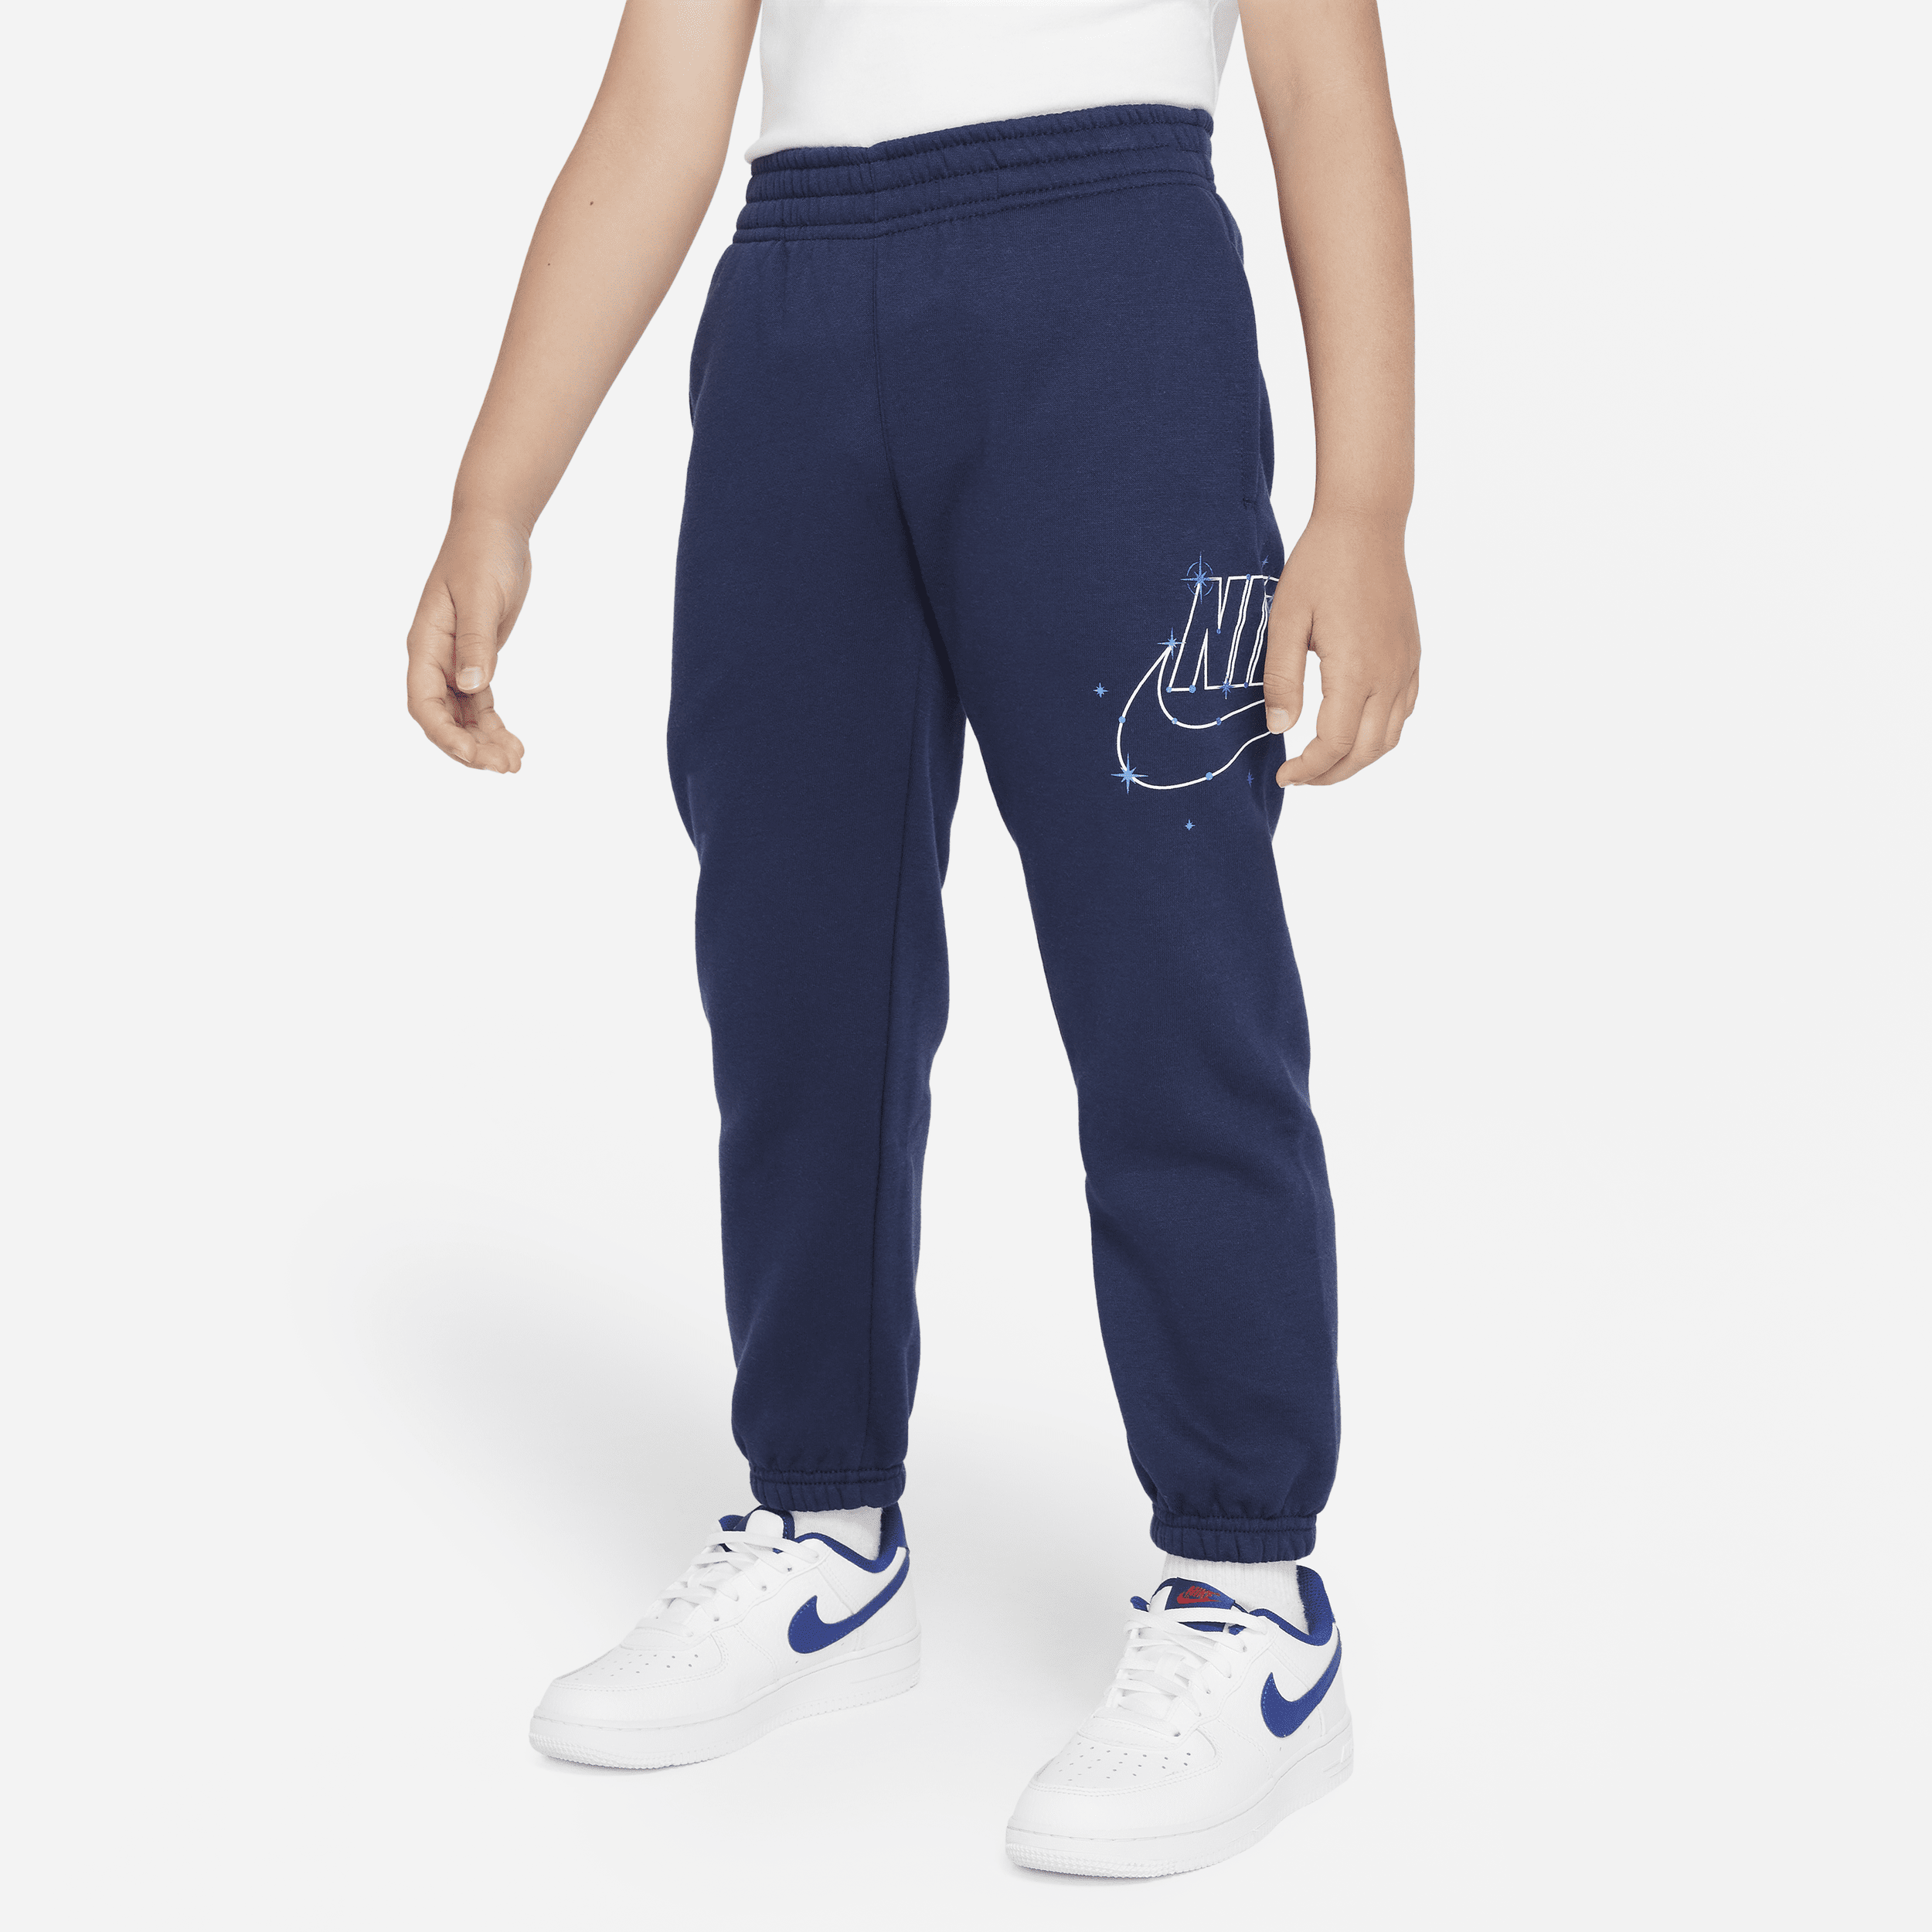 Pantaloni Nike Sportswear Shine Fleece – Bambino/a - Blu